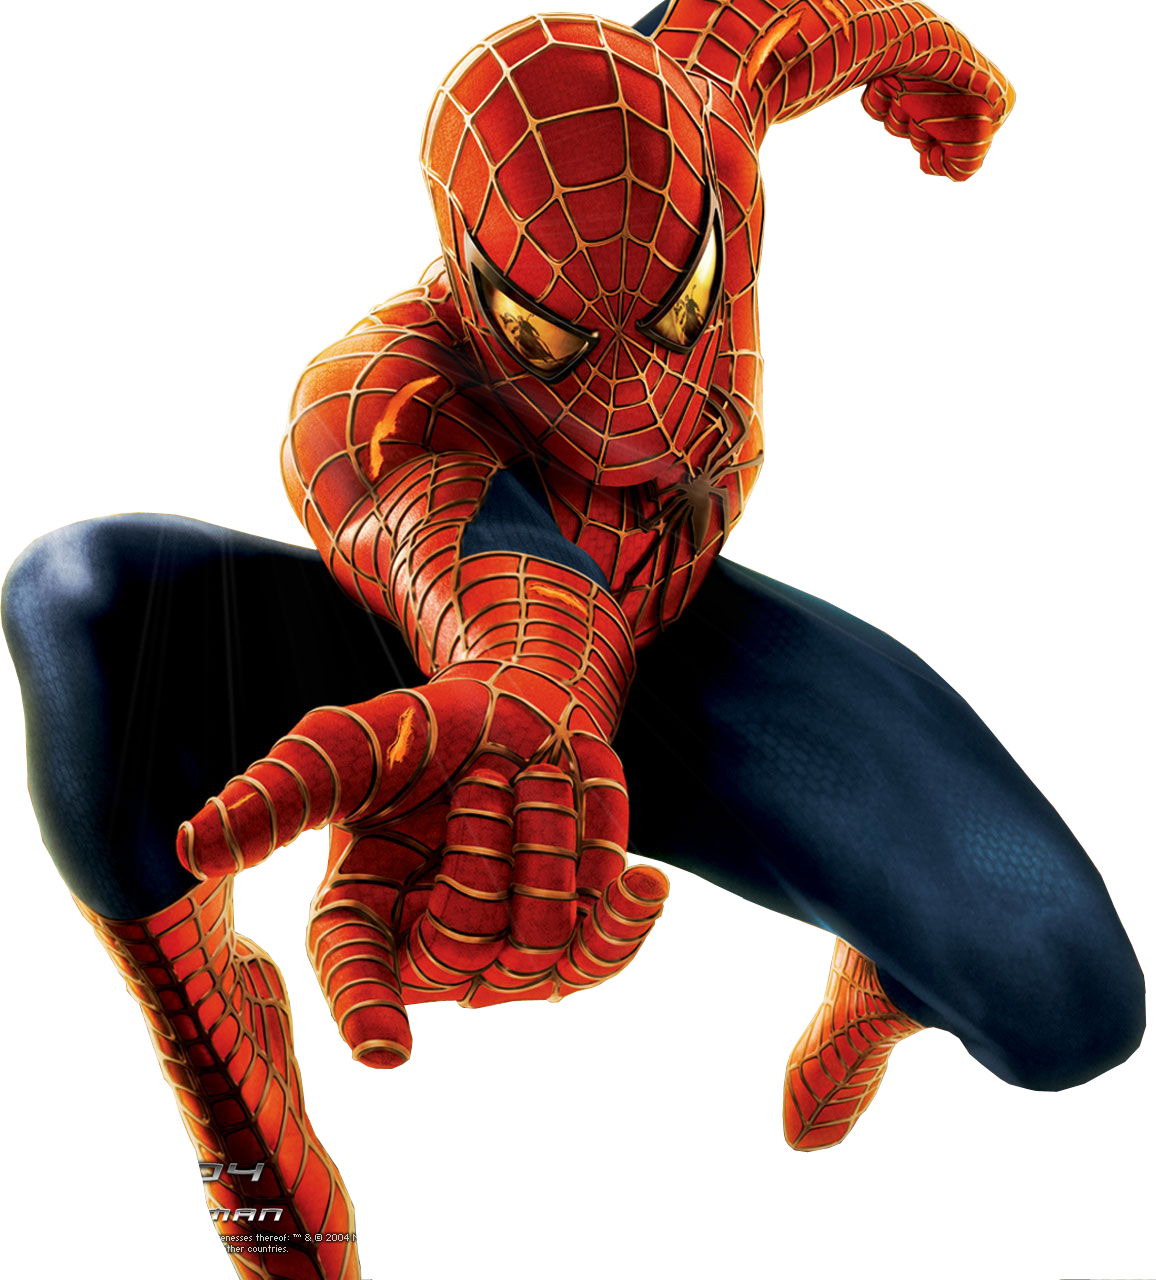 Image - Spiderman Killem.png - Students Wiki